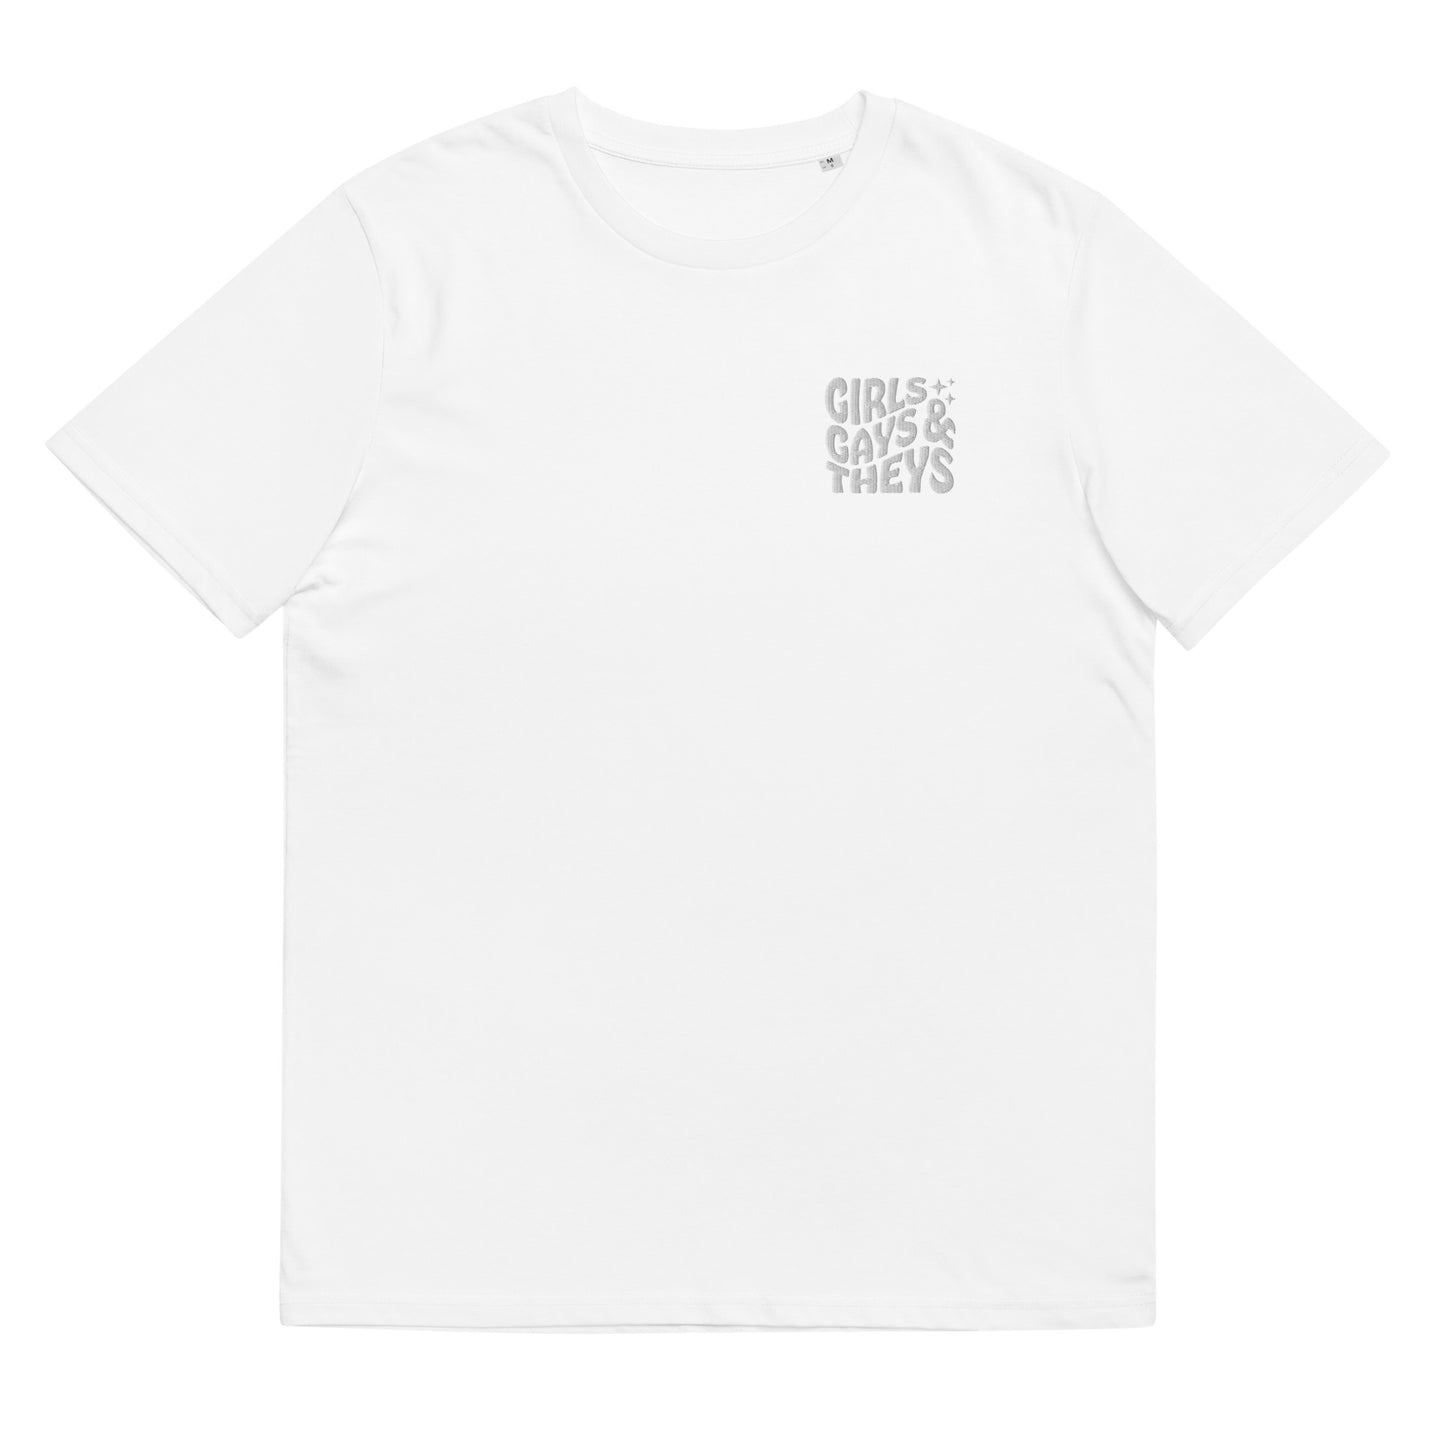 Organic cotton t-shirt: Girls Gays & They's